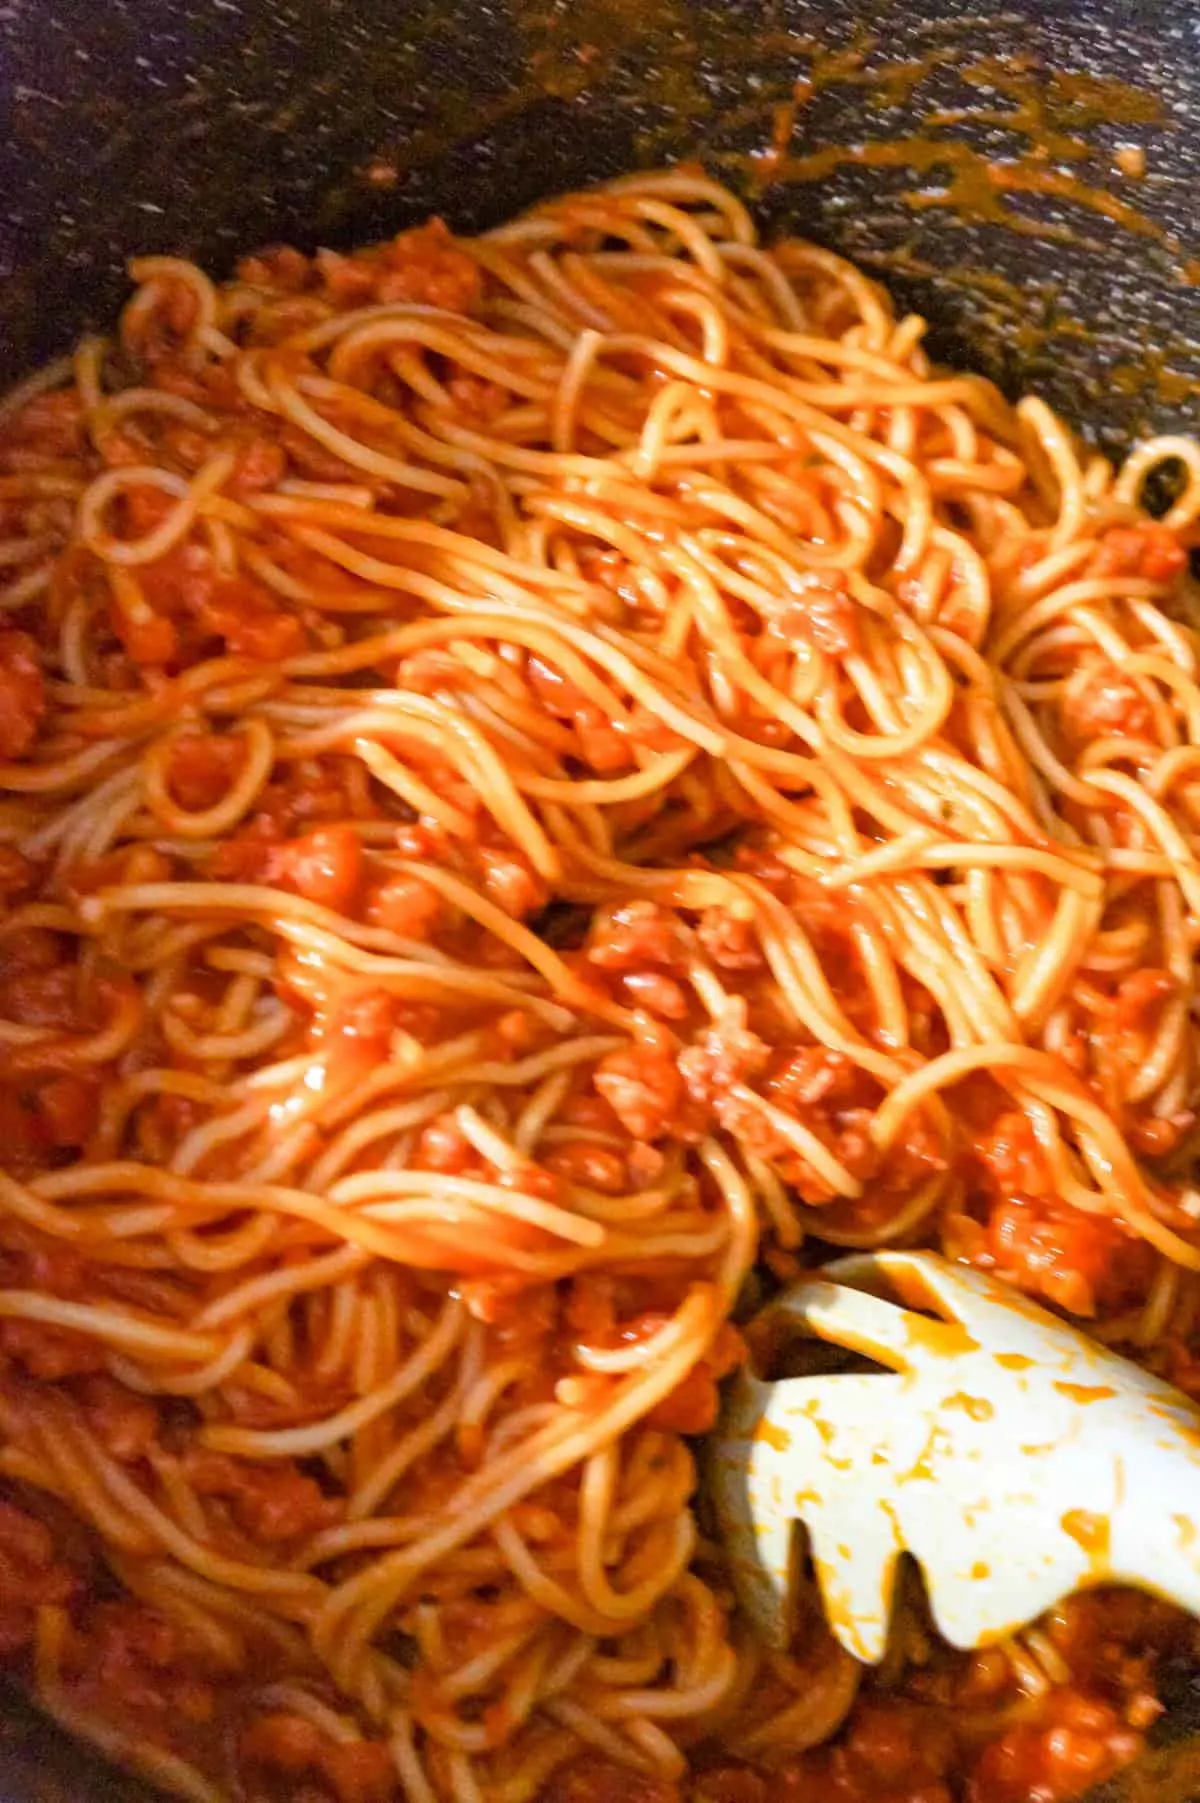 marinara, ground sausage and spaghetti in a large pot